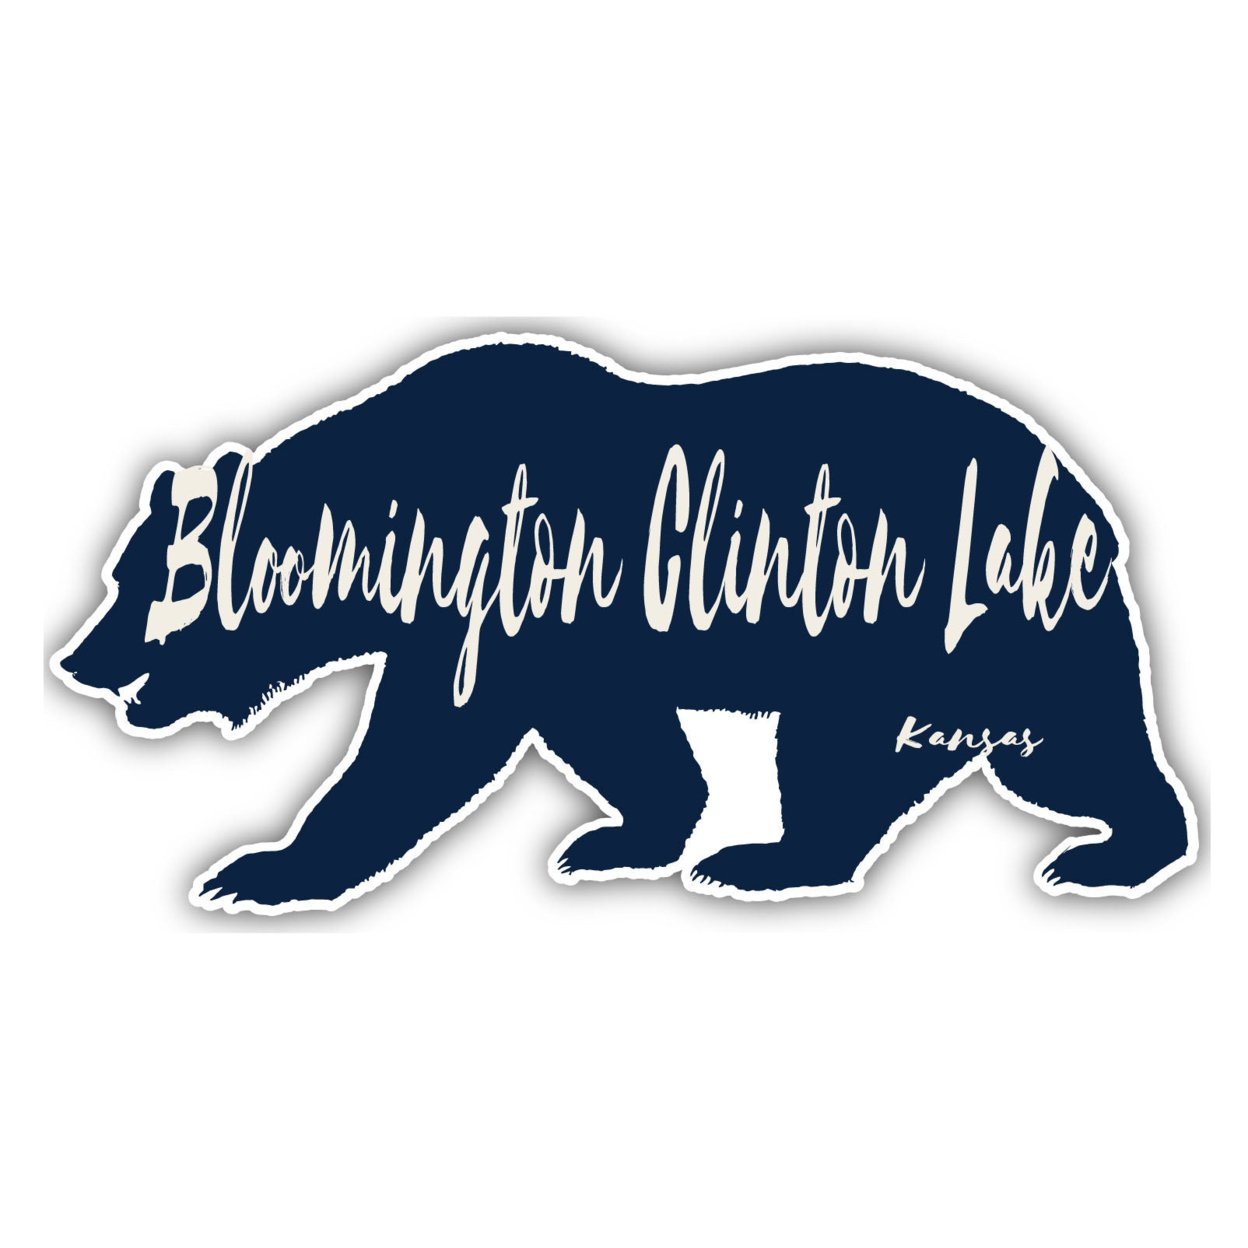 Bloomington Clinton Lake Kansas Souvenir Decorative Stickers (Choose Theme And Size) - 4-Pack, 4-Inch, Bear